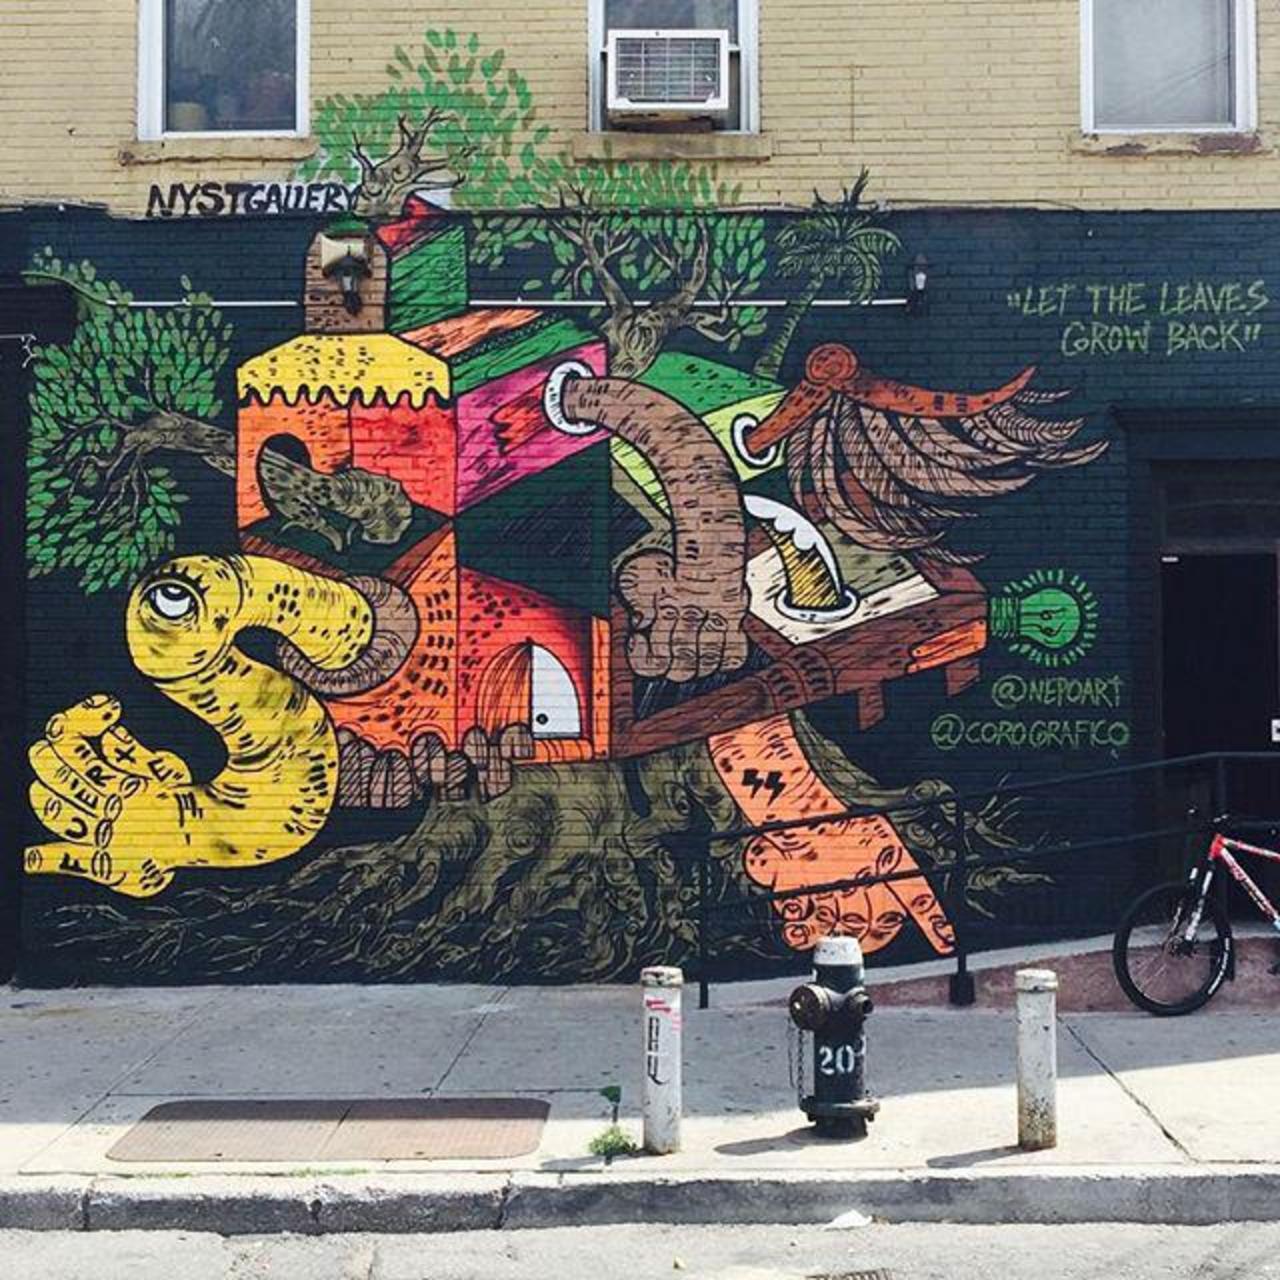 Nepoart corografico #streetart #mural #painting #walls #graffiti #bushwick #brooklyn #nyc #streetartnyc #nycstreeta… http://t.co/SSJfa89ADF